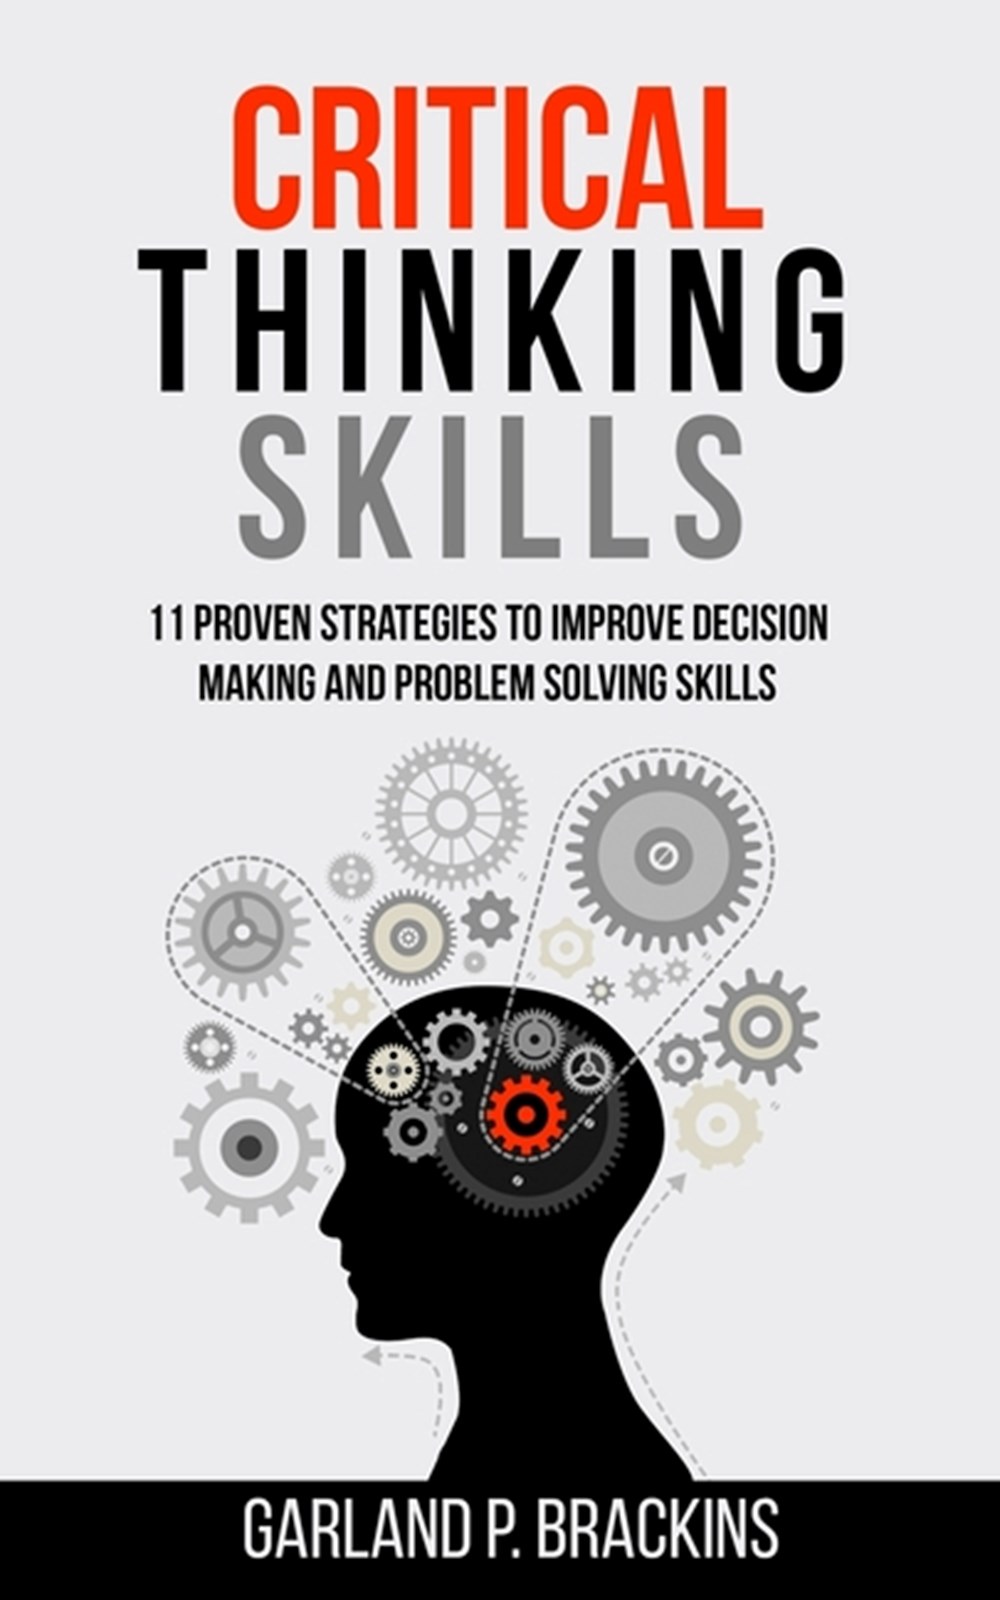 critical thinking proven strategies to improve decision making skills pdf